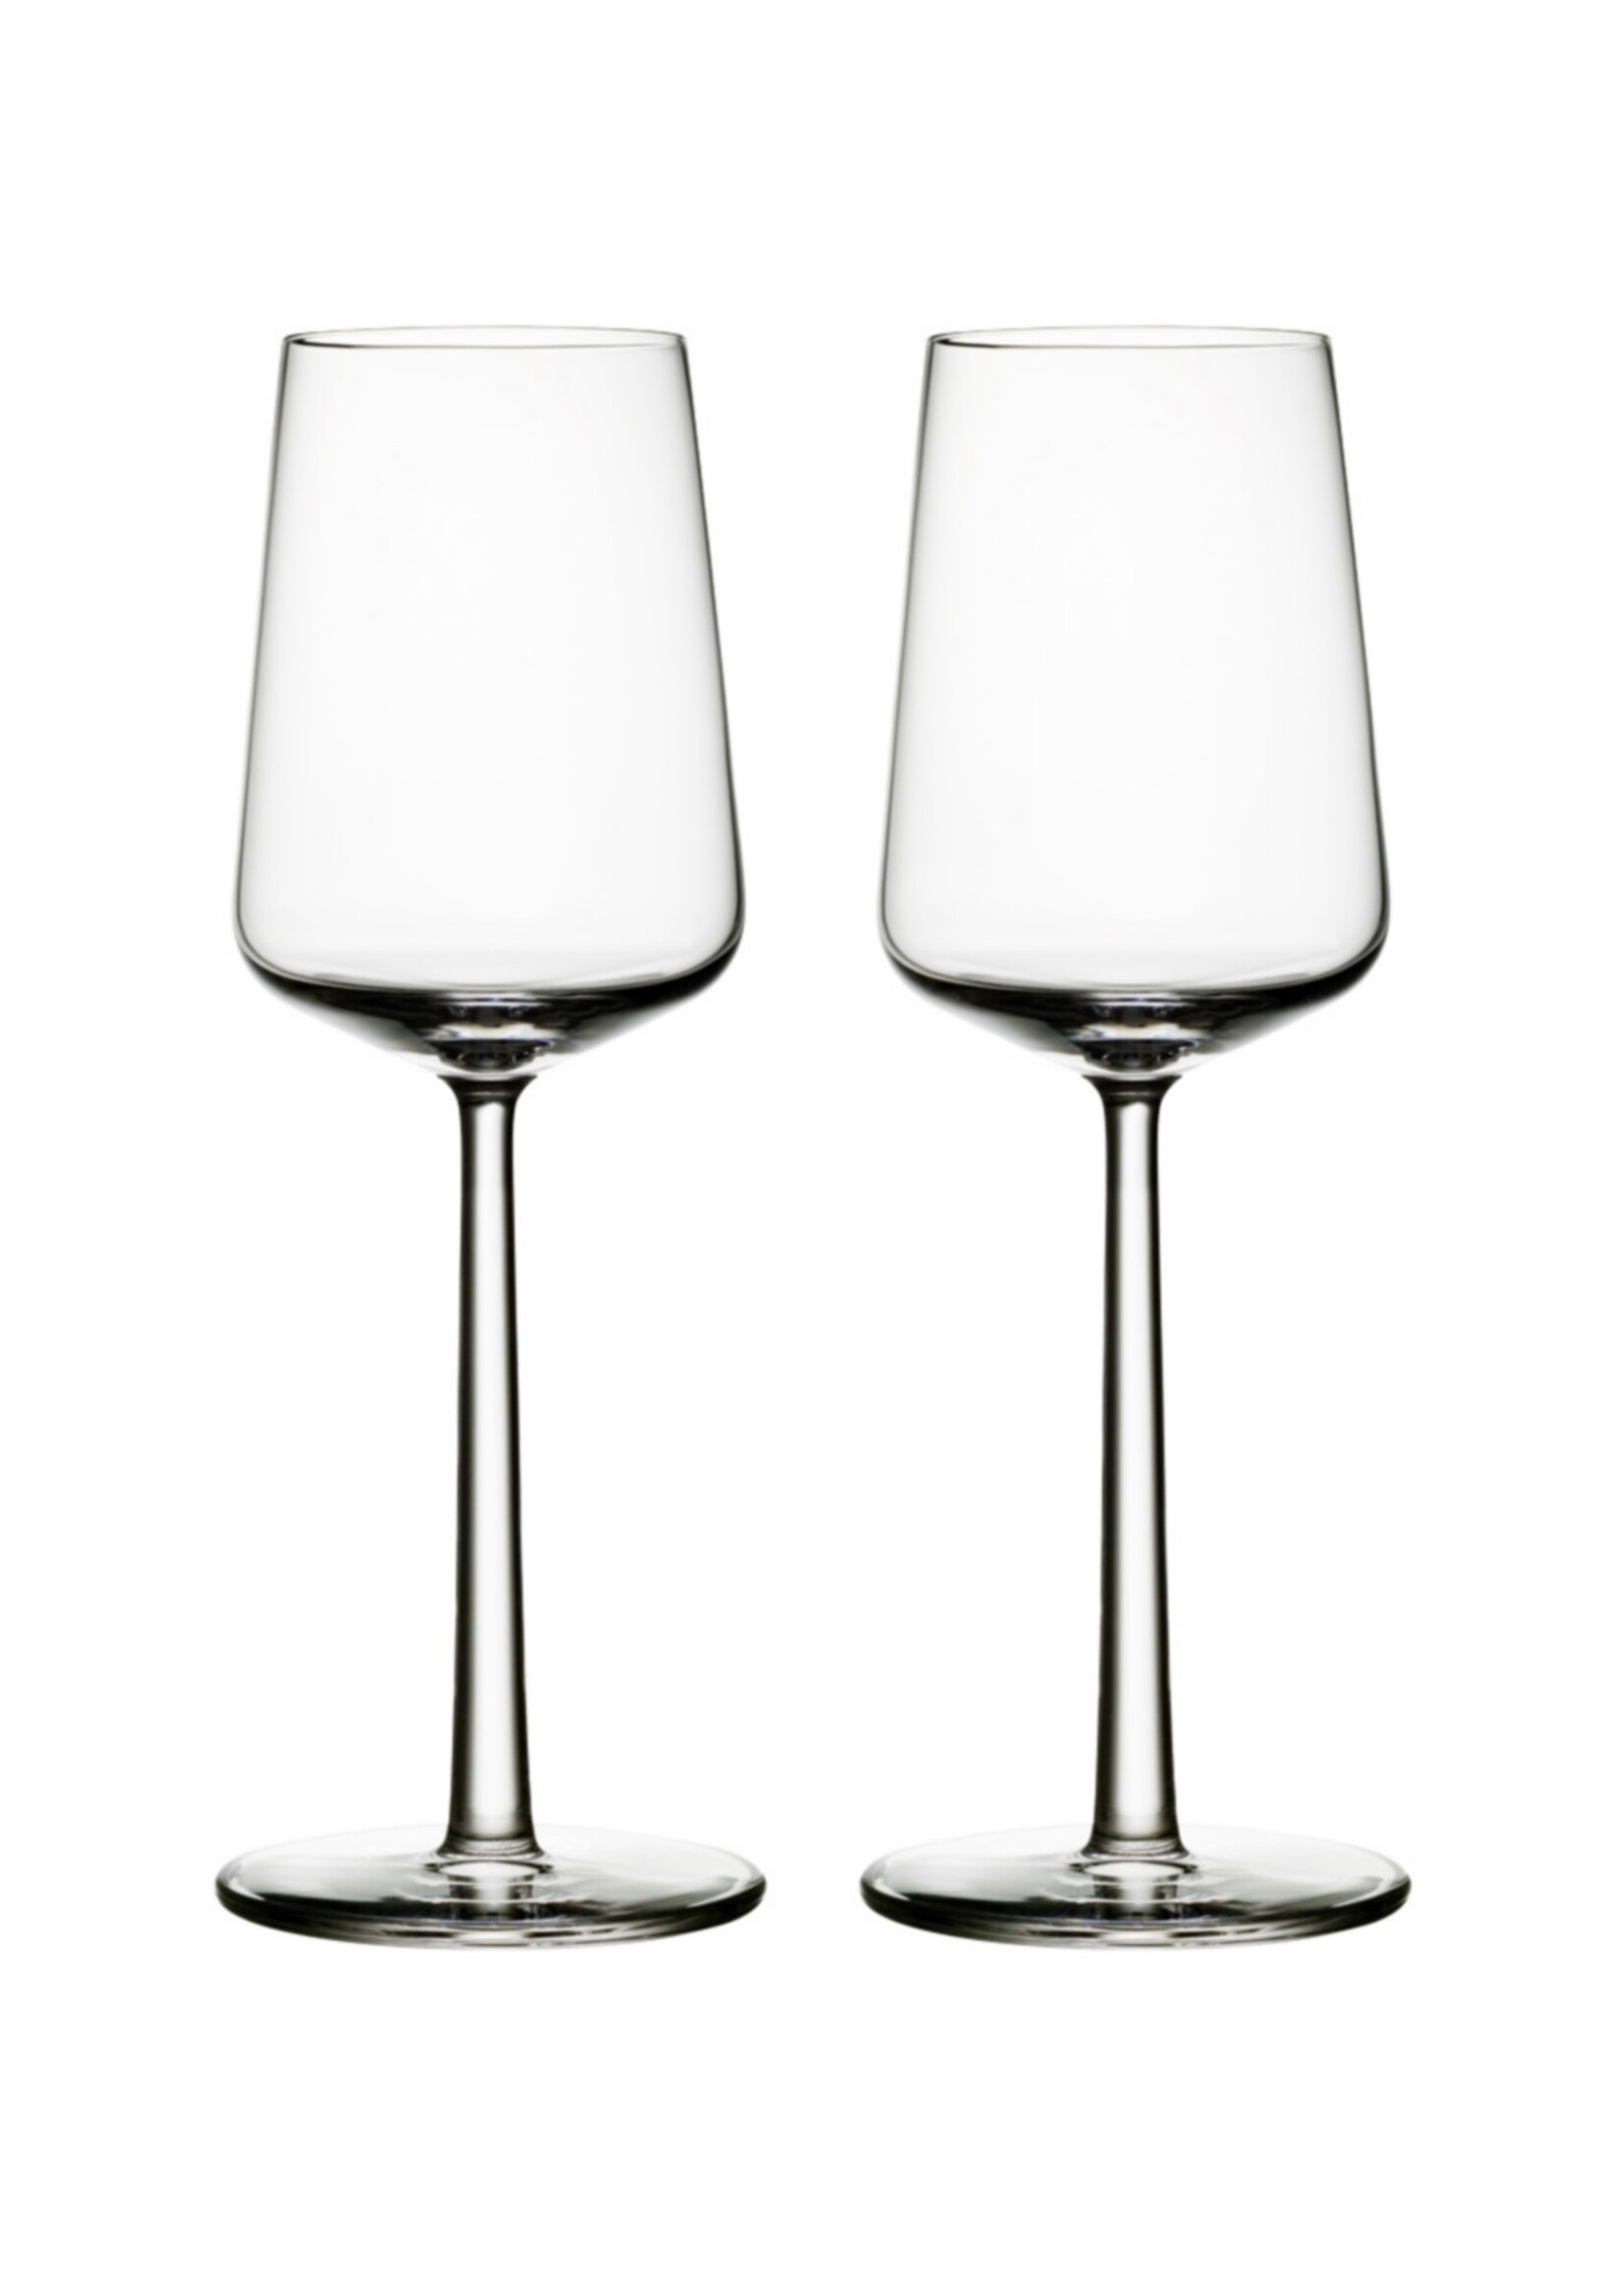 Iittala Iittala - Essence - Verres à vin blanc - Lot de 6